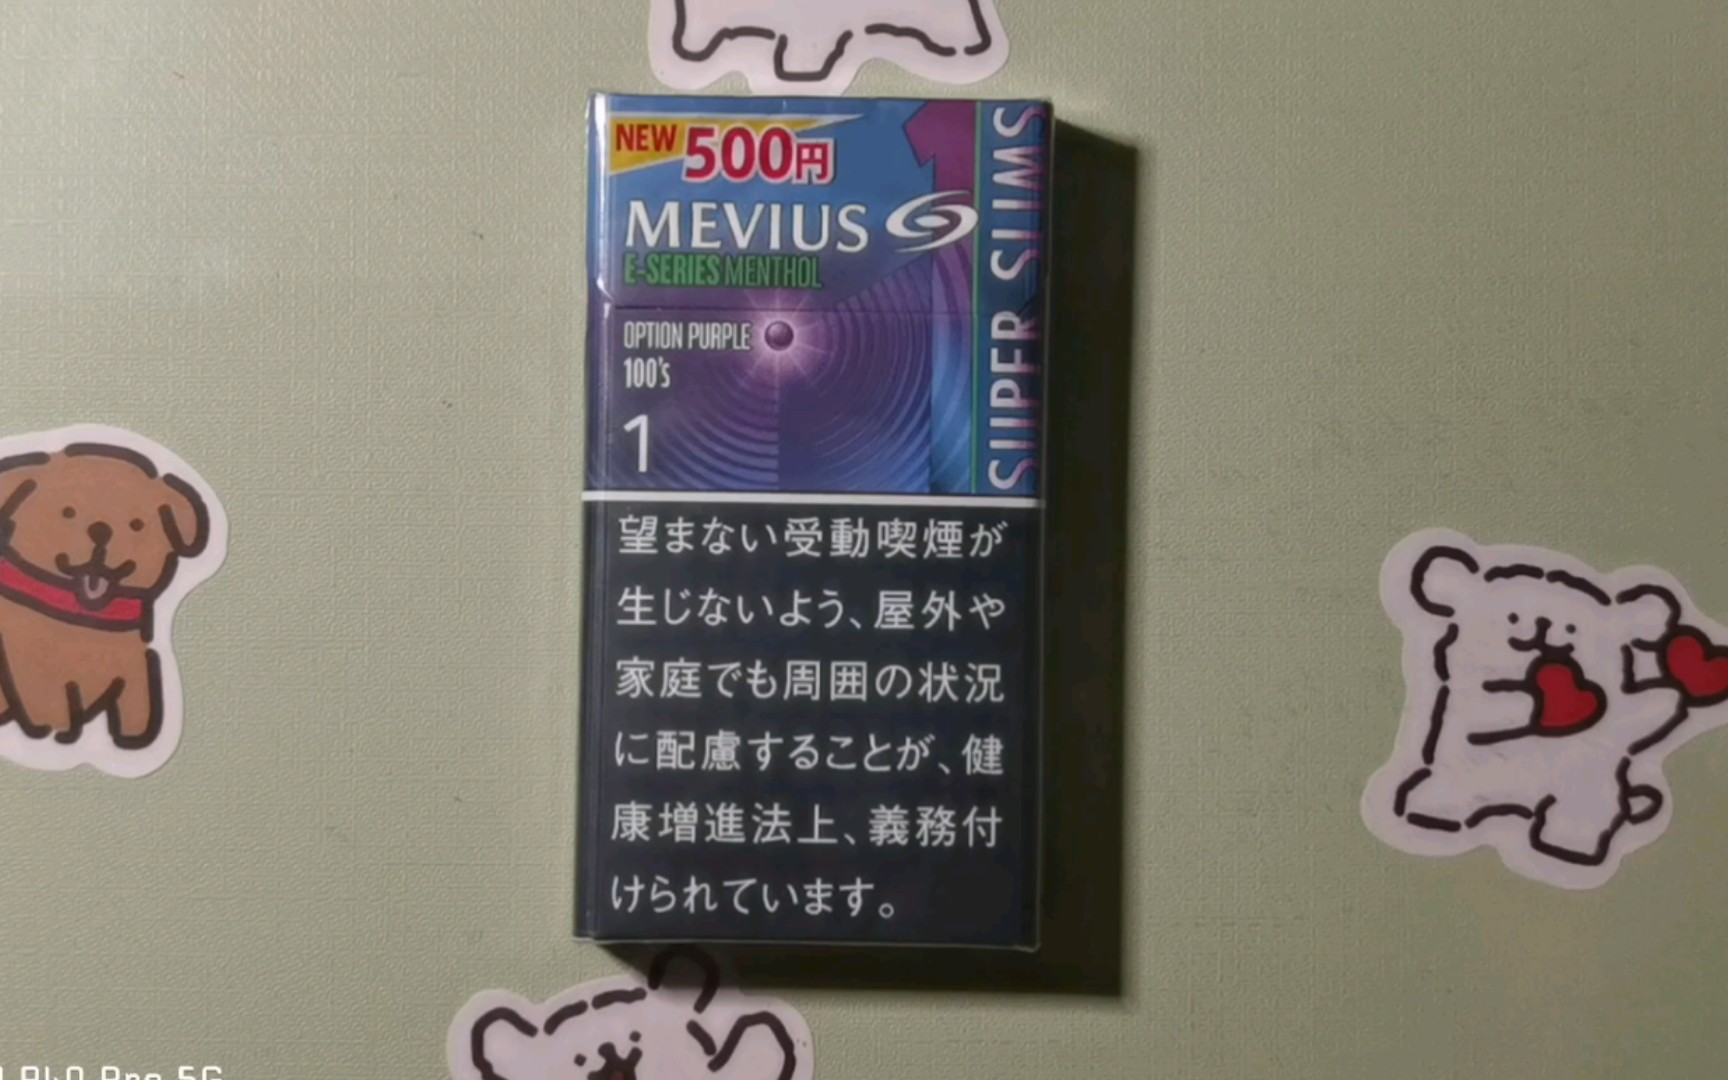 mevius香烟口味图片